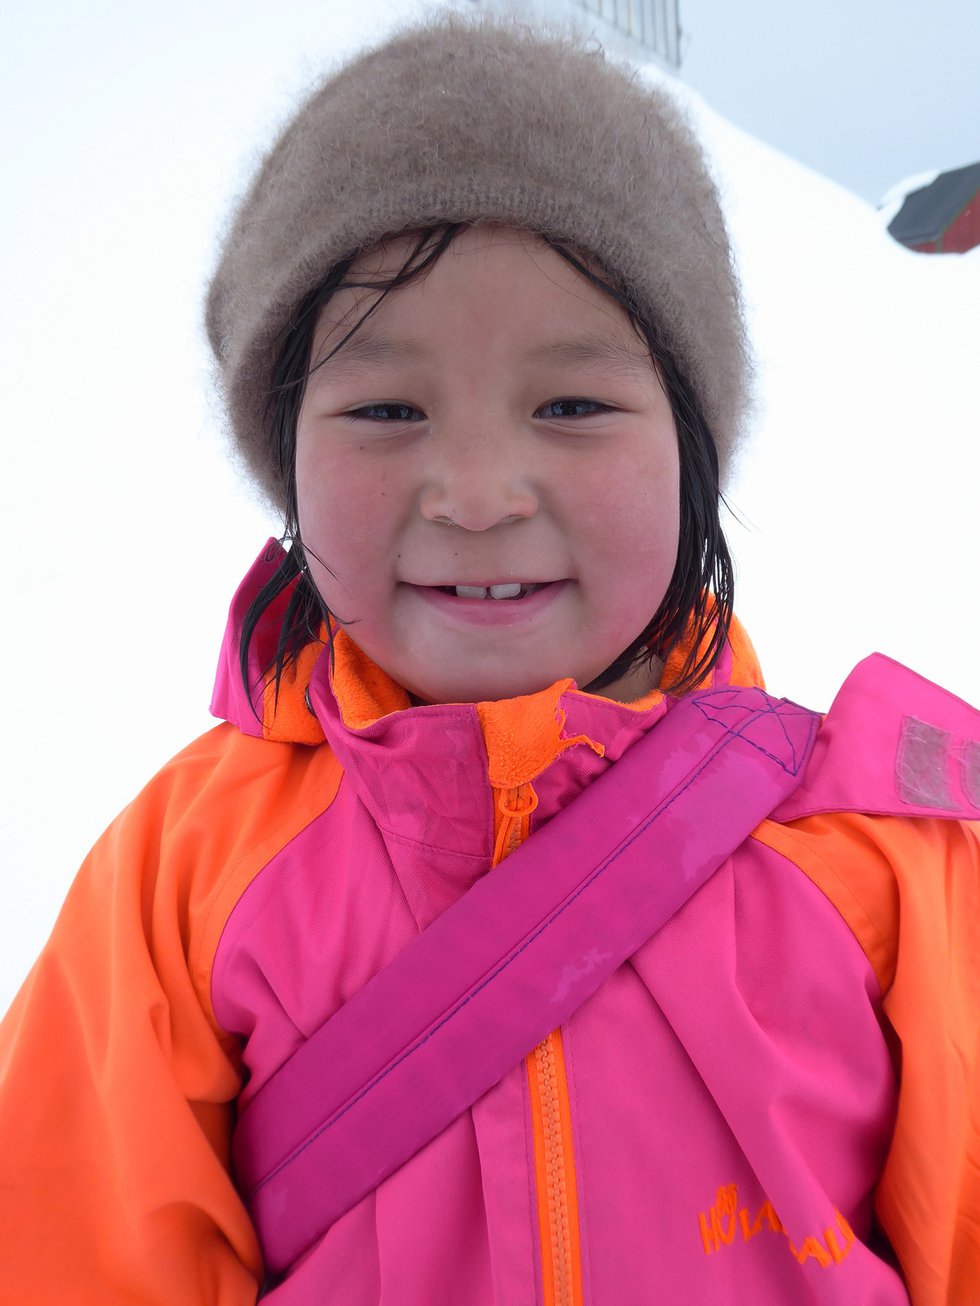 49.-Pearsall-East-Greenland-Tiniteqilaaq-school-girl-during-recess-P1020580-4.jpg